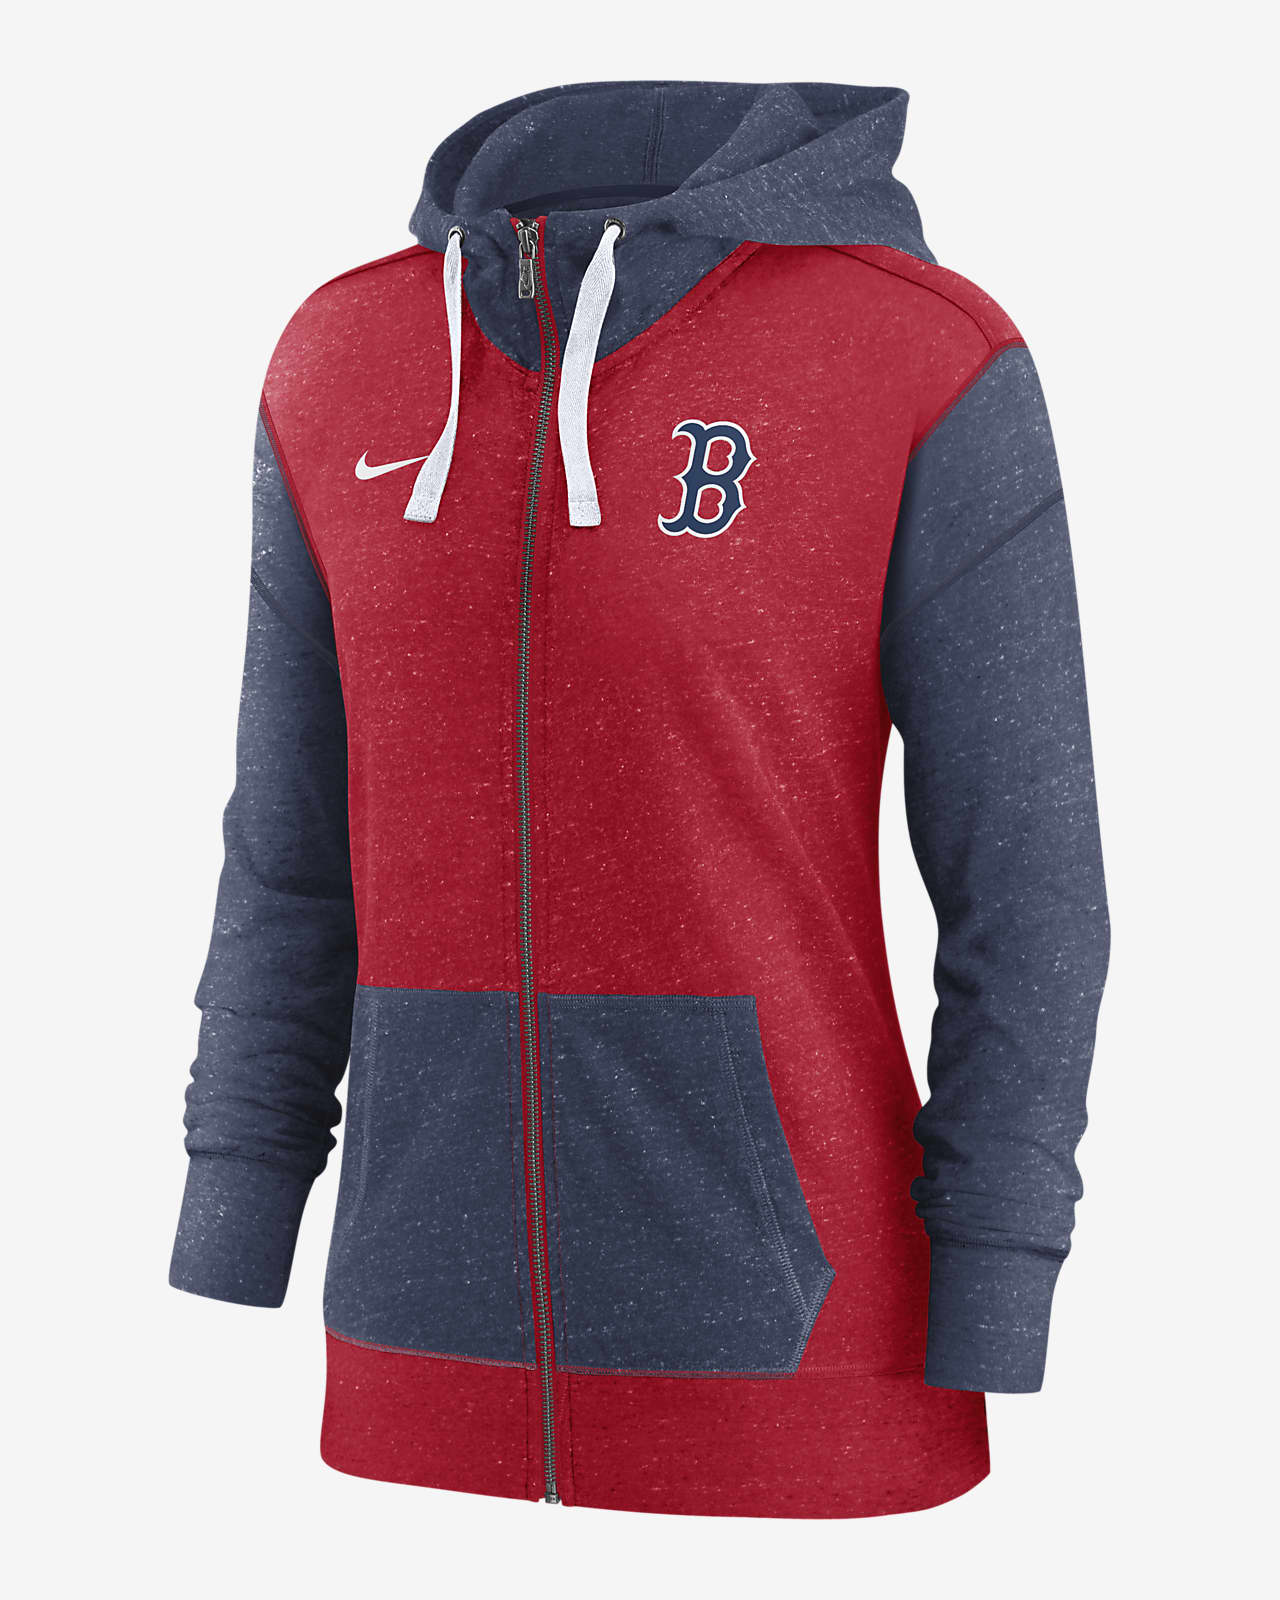 Nike Gym (MLB Boston Red Sox) Women's Full-Zip Hoodie.